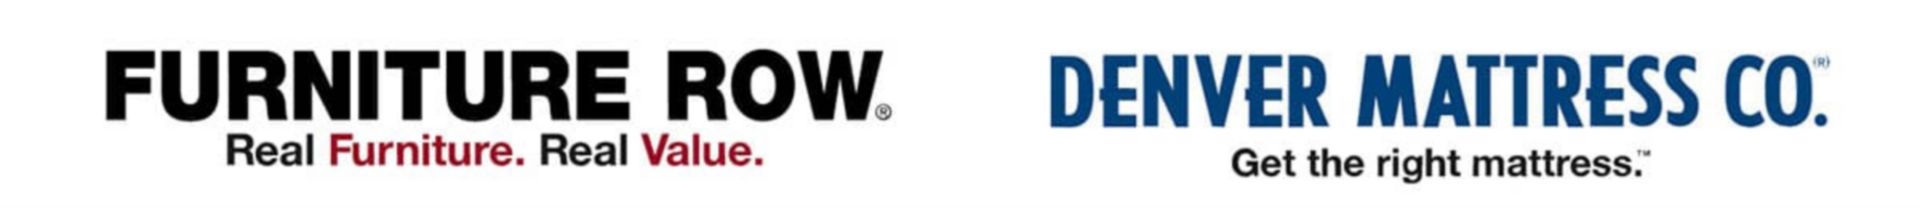 Denver Mattress and Furniture Row Logos